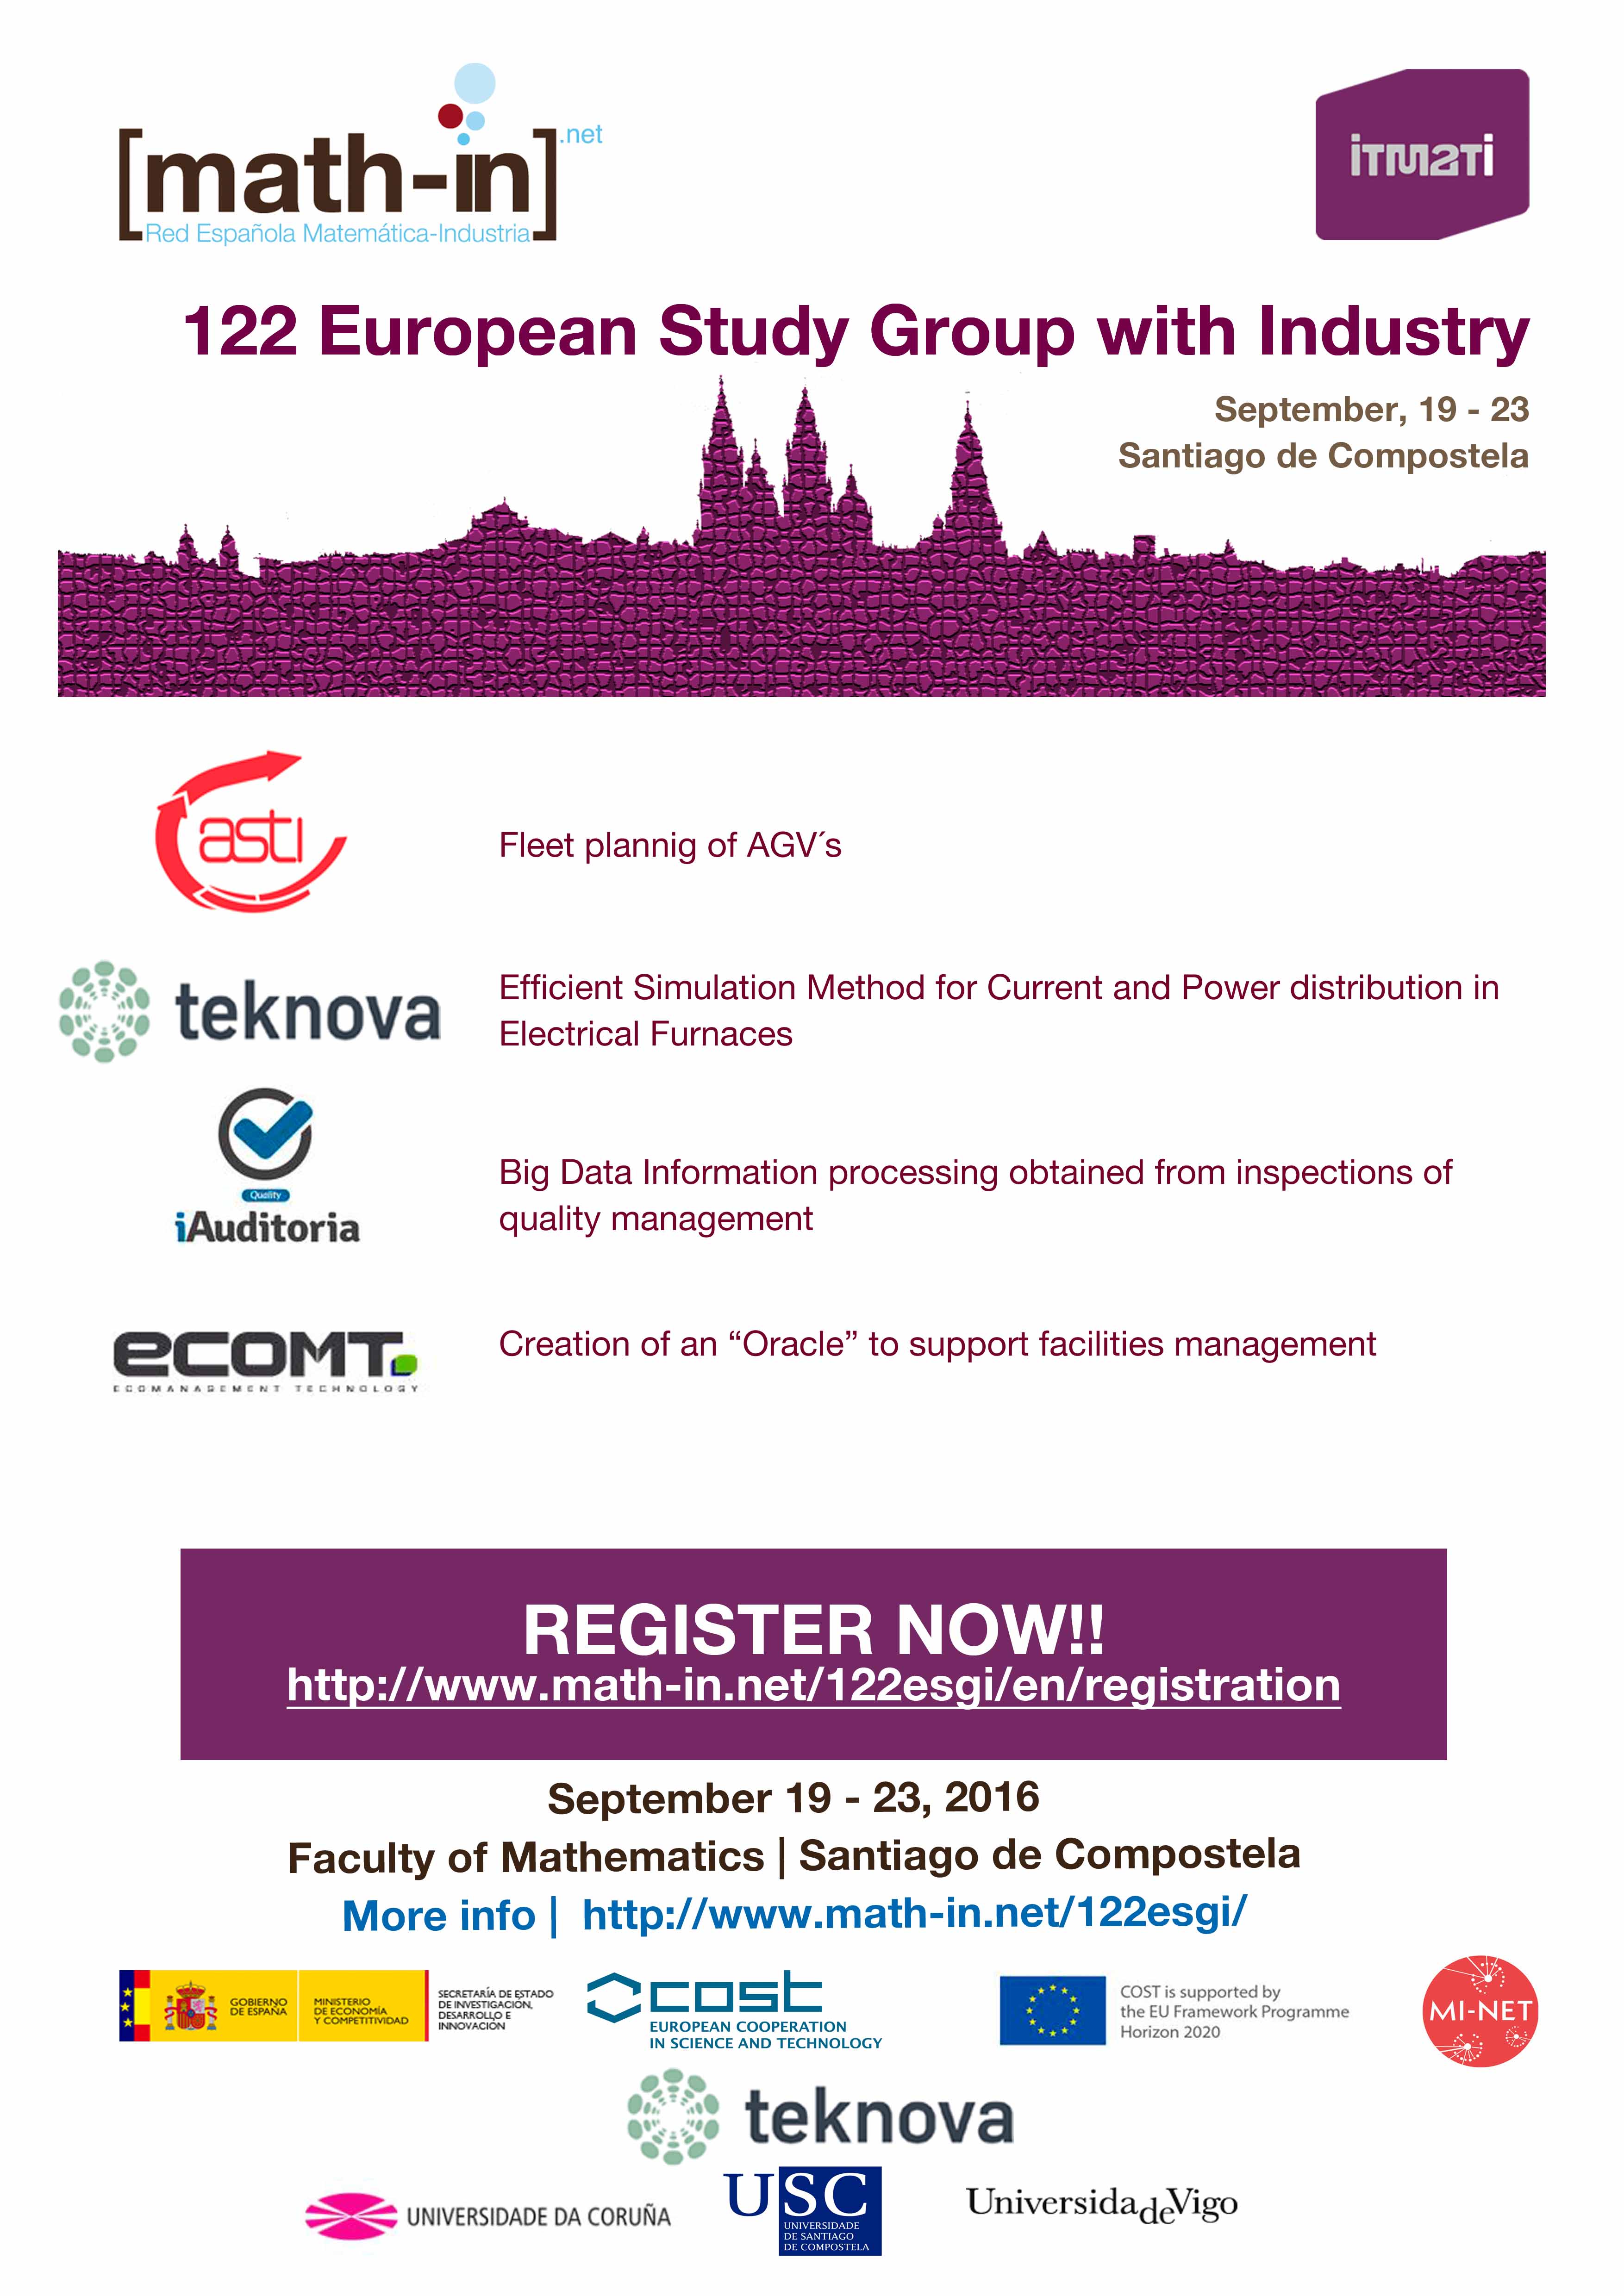 ESGI, ITMATI, european study group with Industry